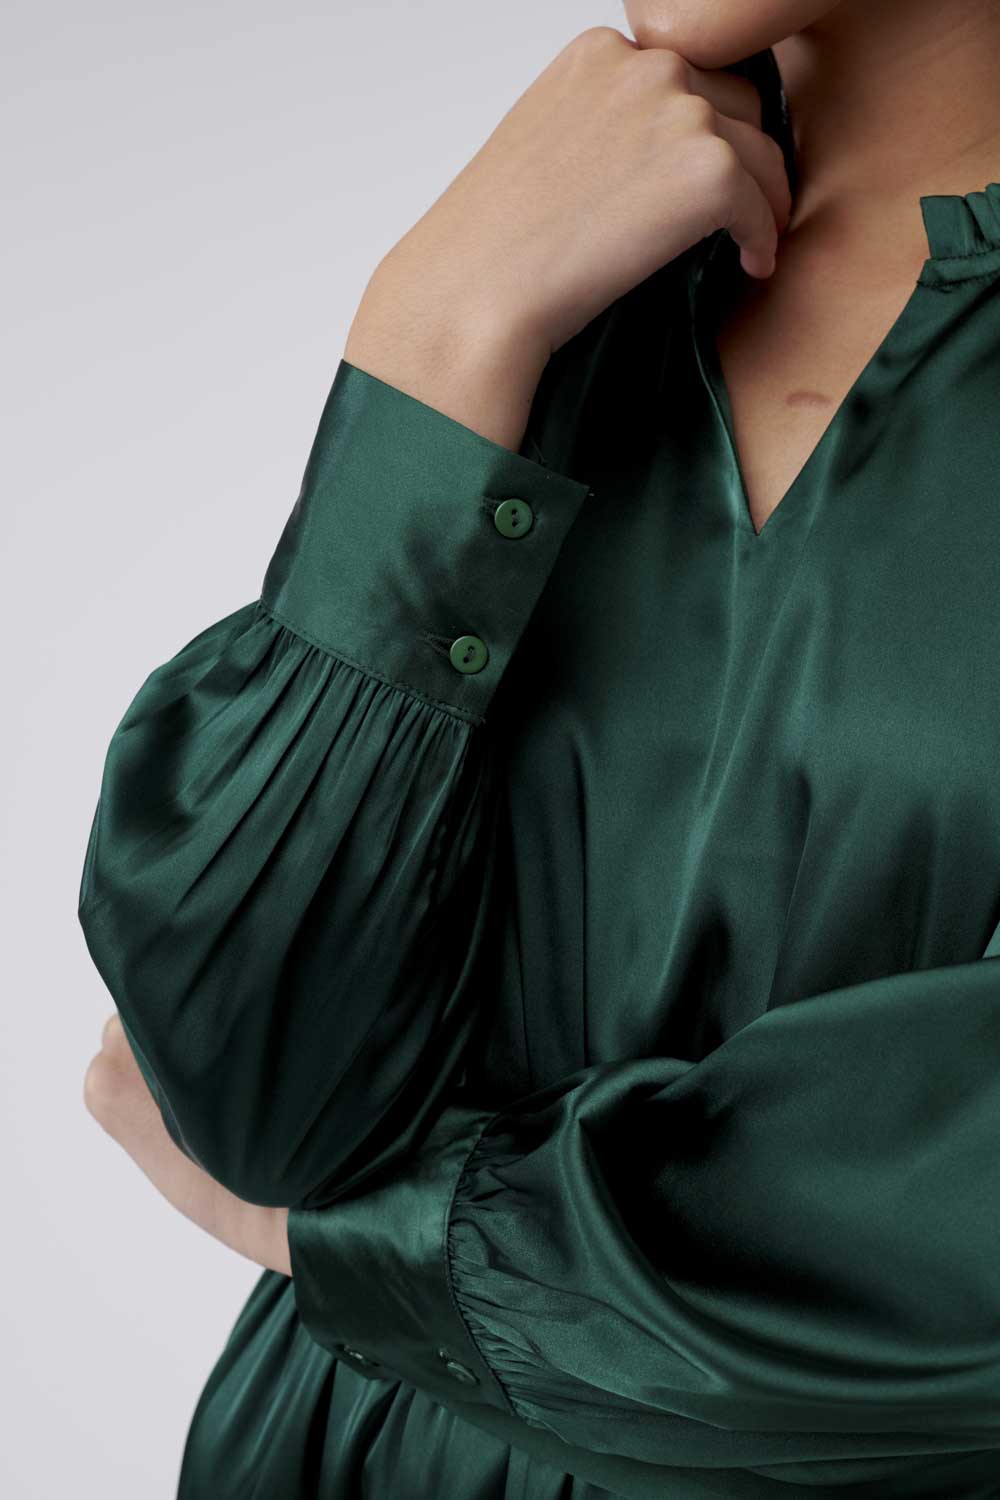 Evelyn Silky Long Sleeve Dress- Green